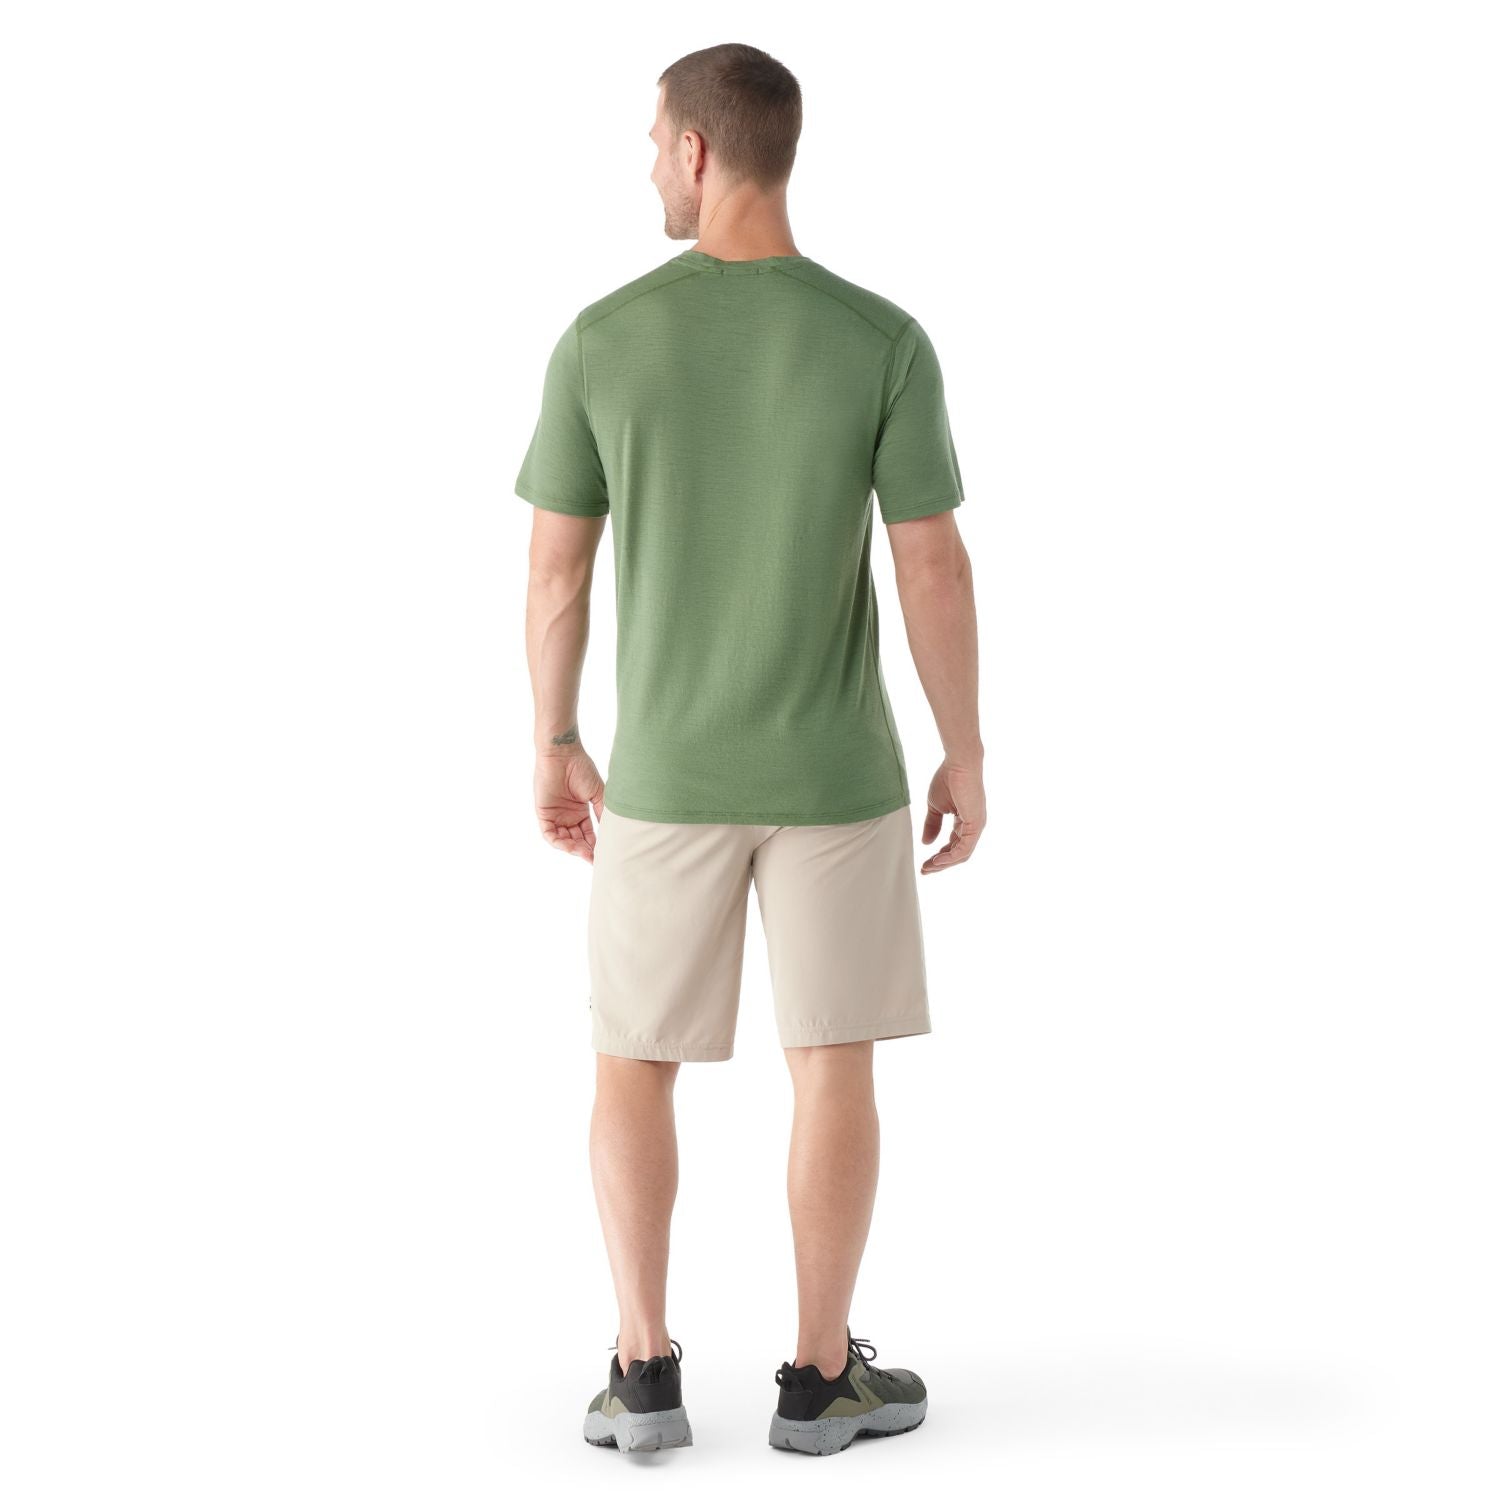 Smartwool Men's Merino Short Sleeve Tee Fern Green Model Back